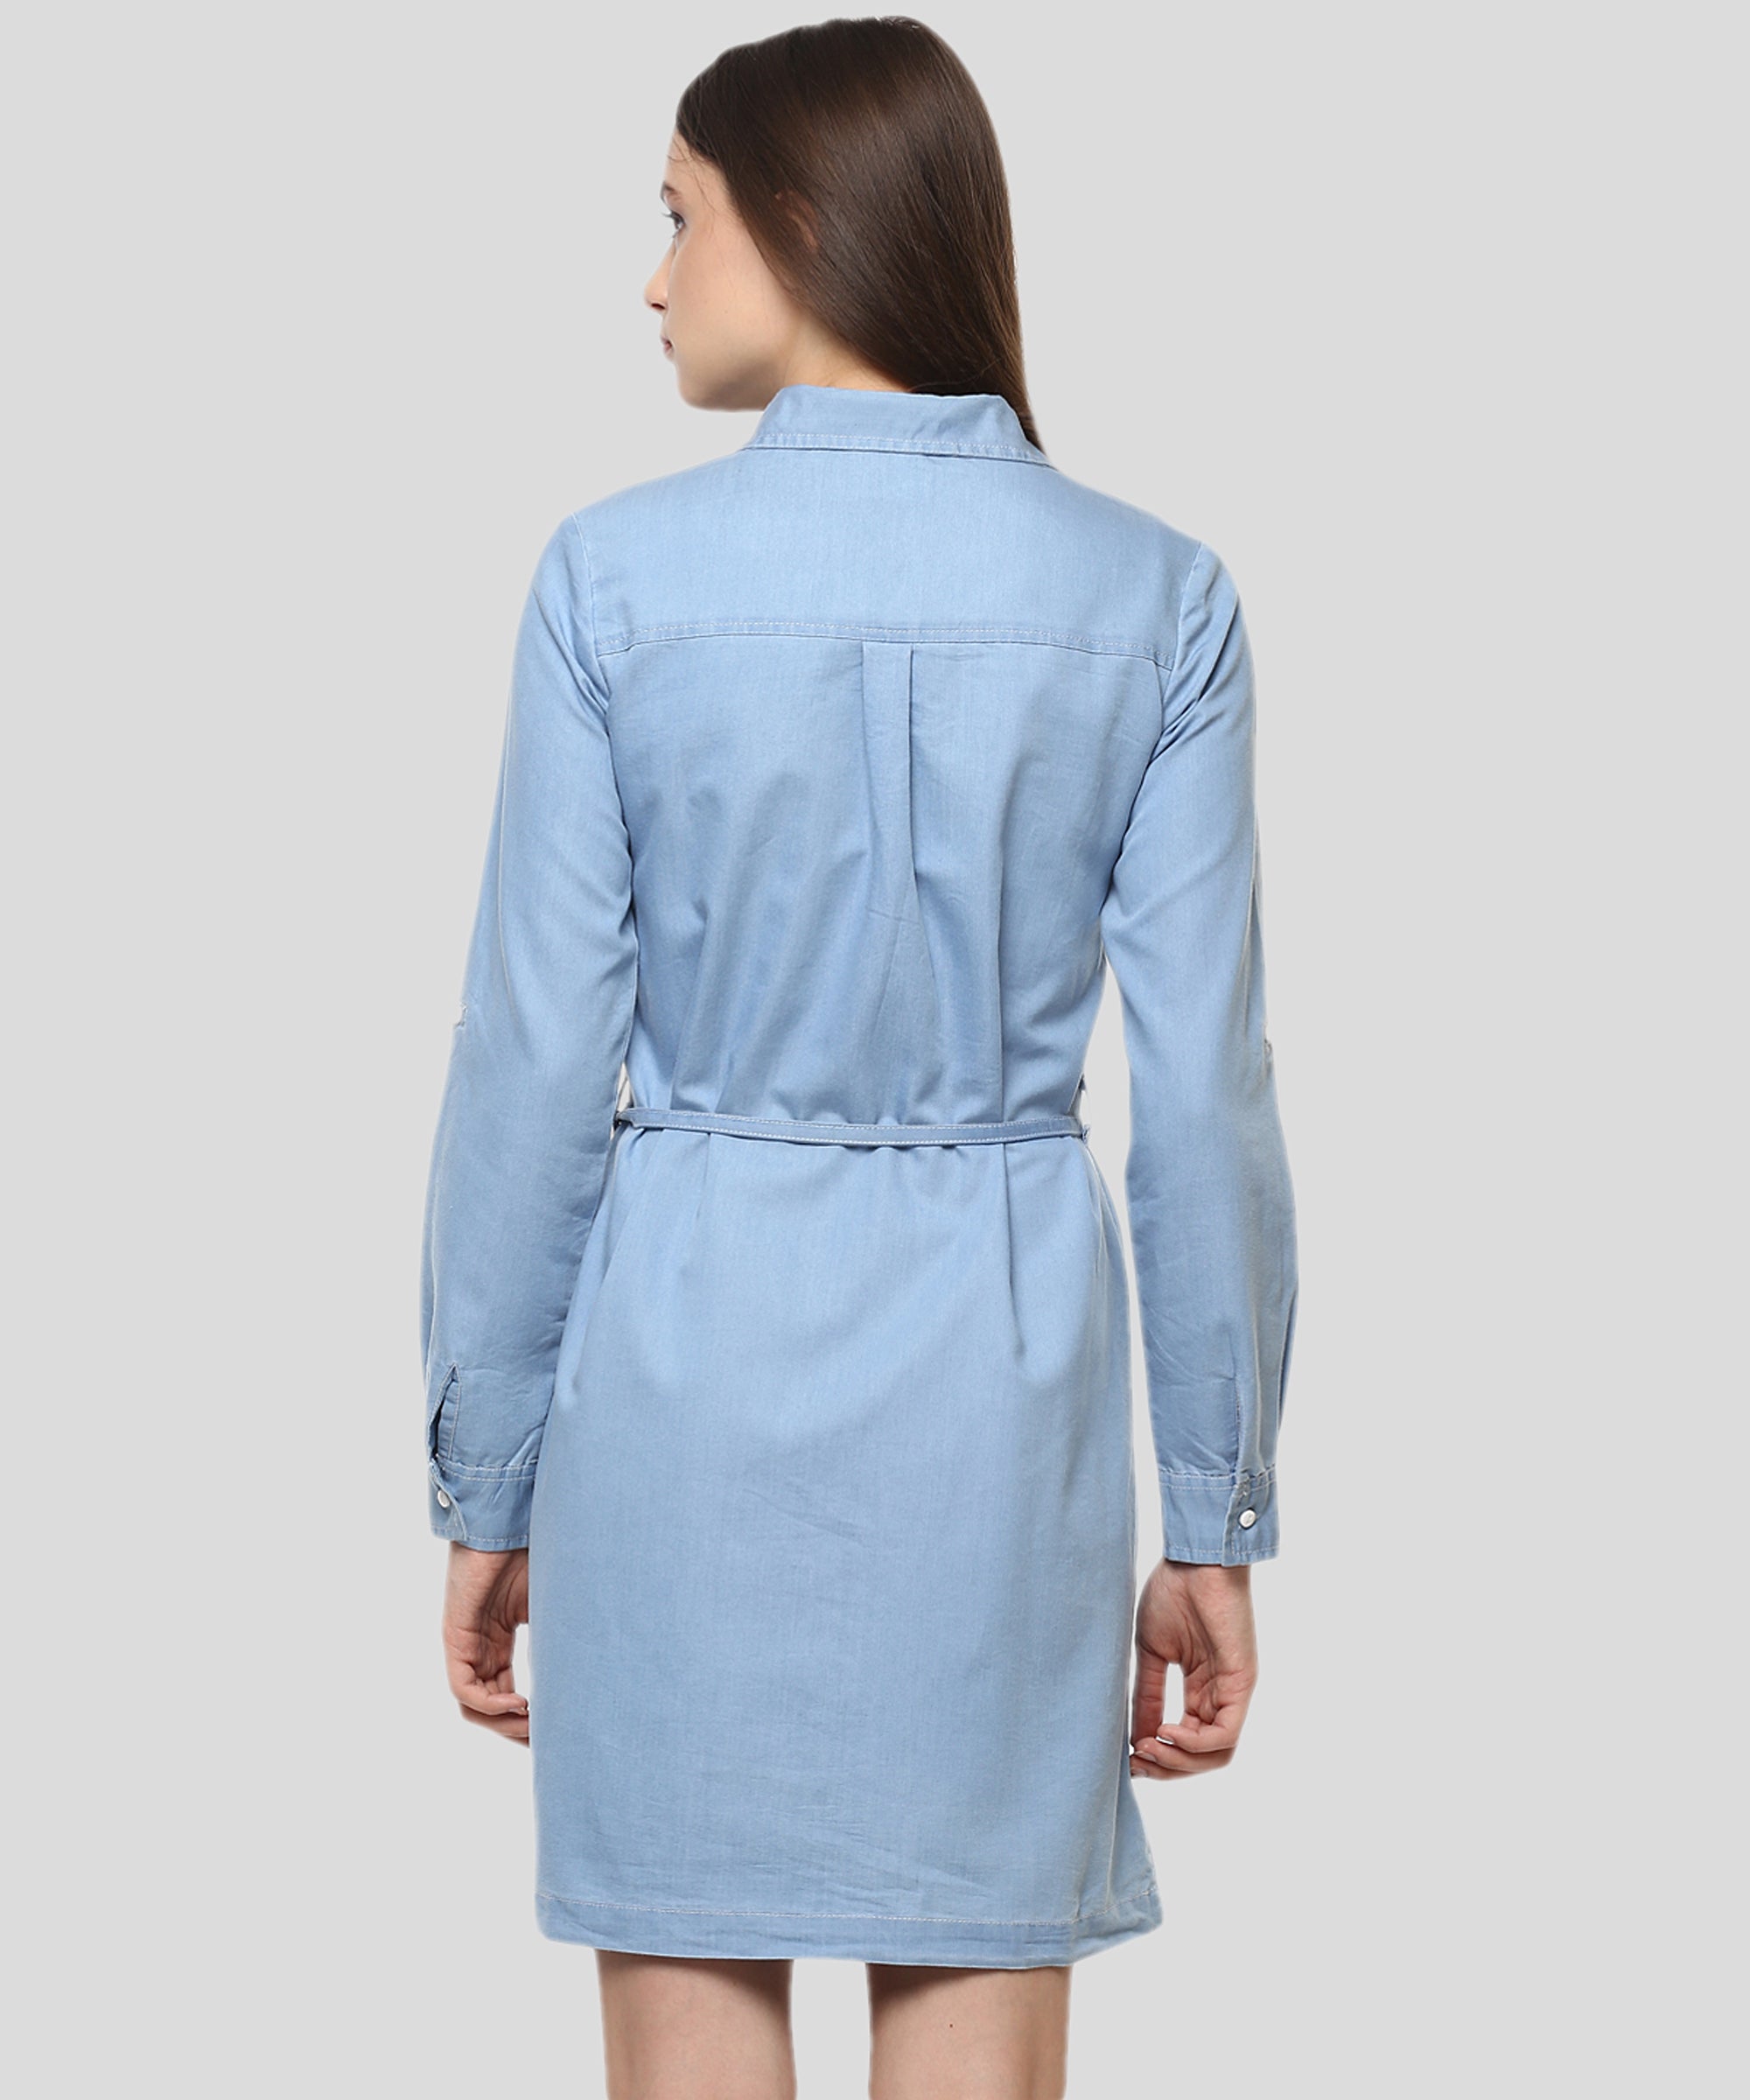 Buy StyleStone (3325IceShinyBtnS Women's Ice Blue Denim Dress with Buttons  at Amazon.in